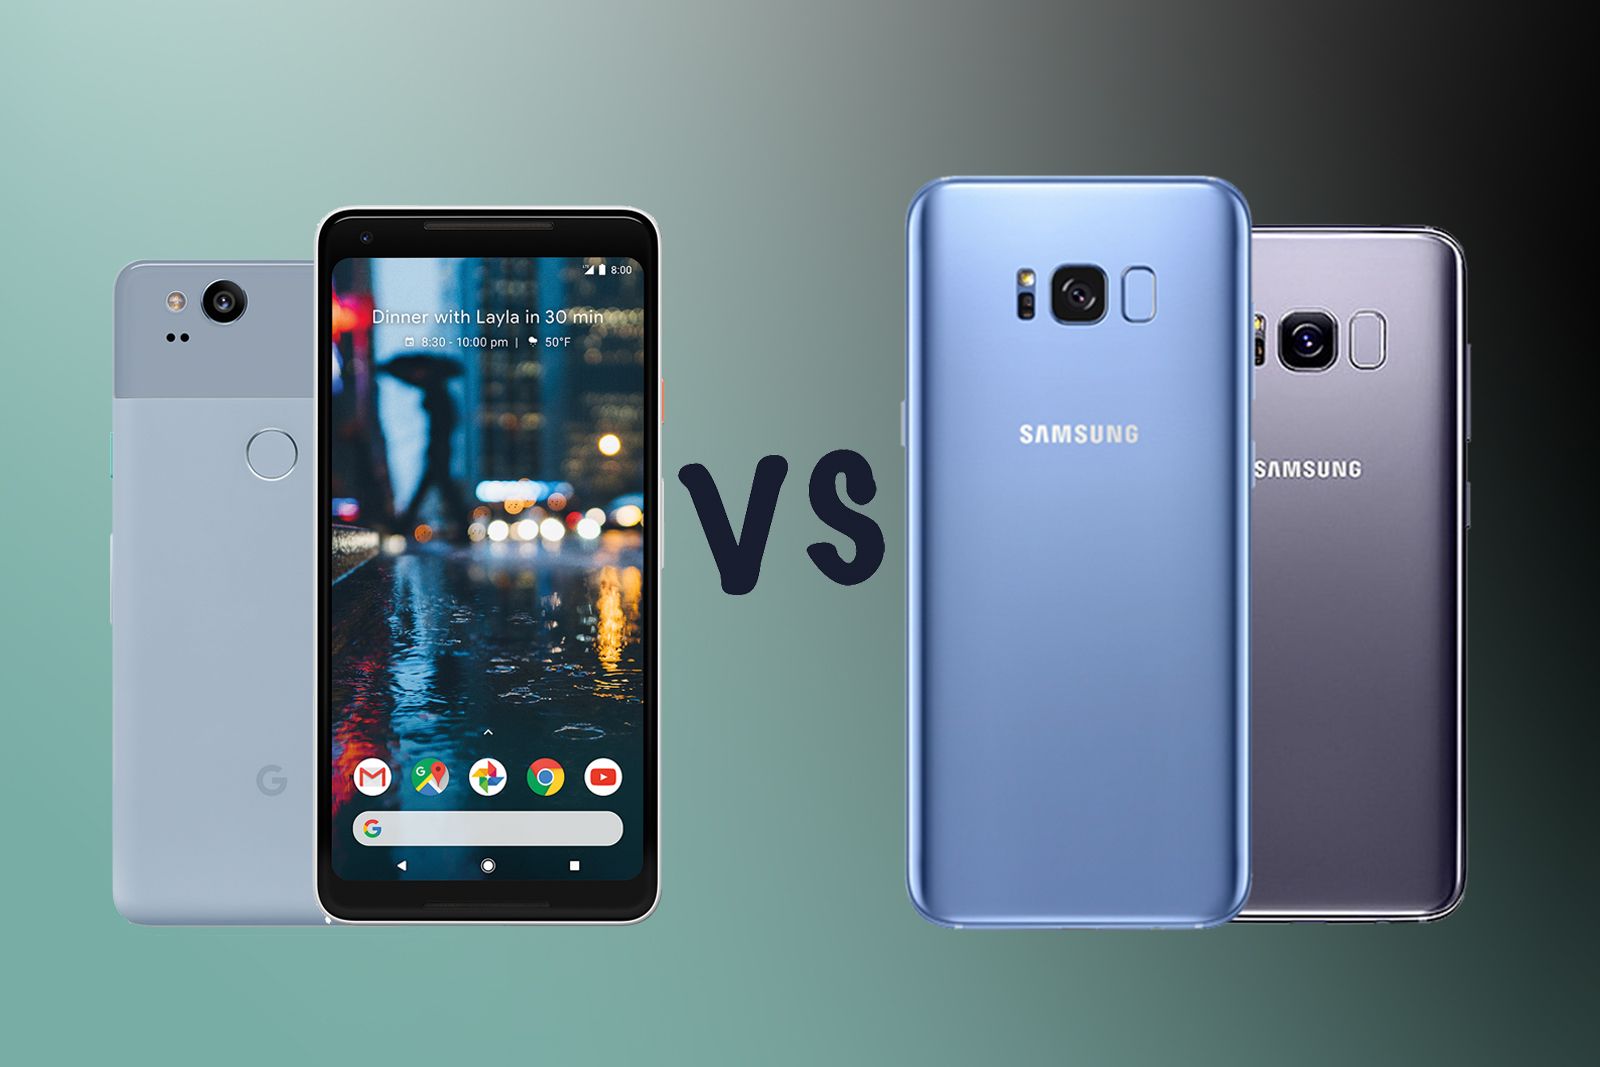 Pixel 2 vs Pixel 2 XL vs Samsung Galaxy S8 vs S8 image 1